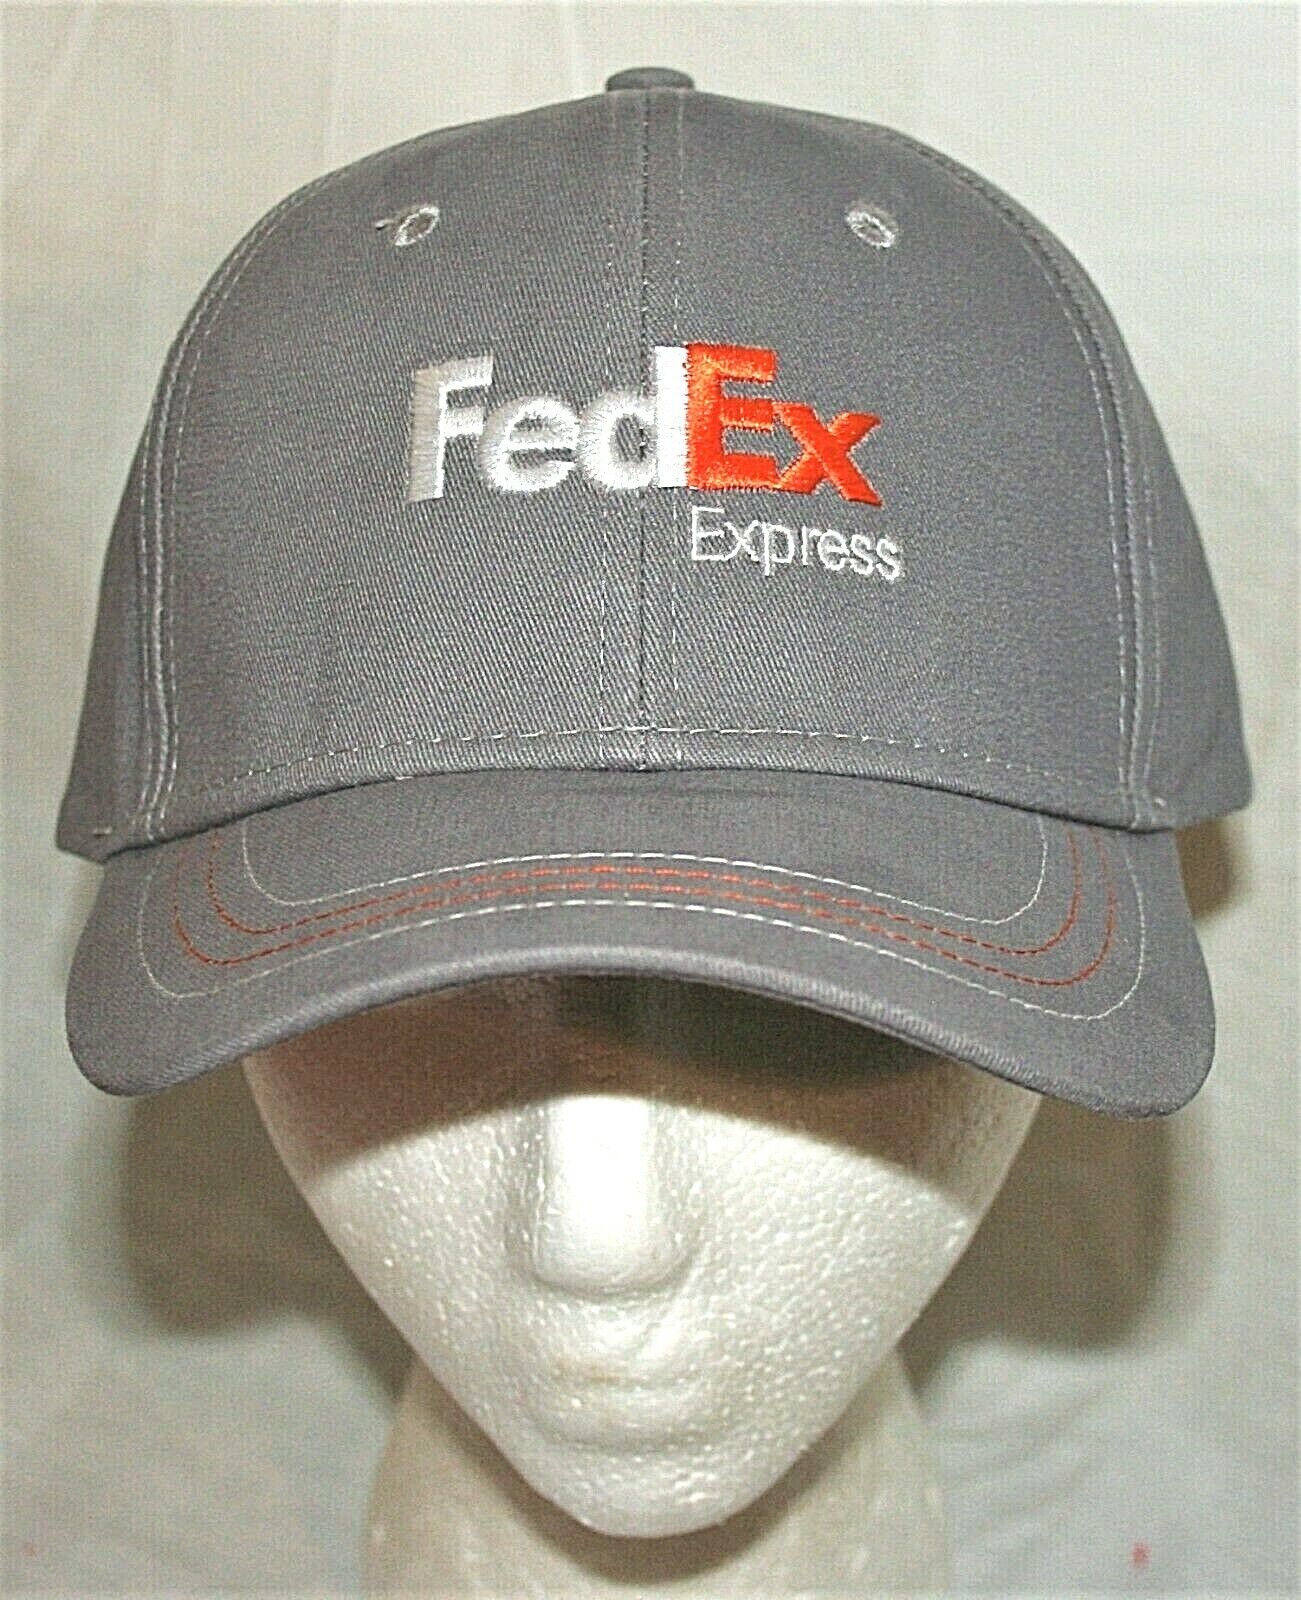 FedEx Express Gray Delivery Baseball Cap Hat New OSFM 